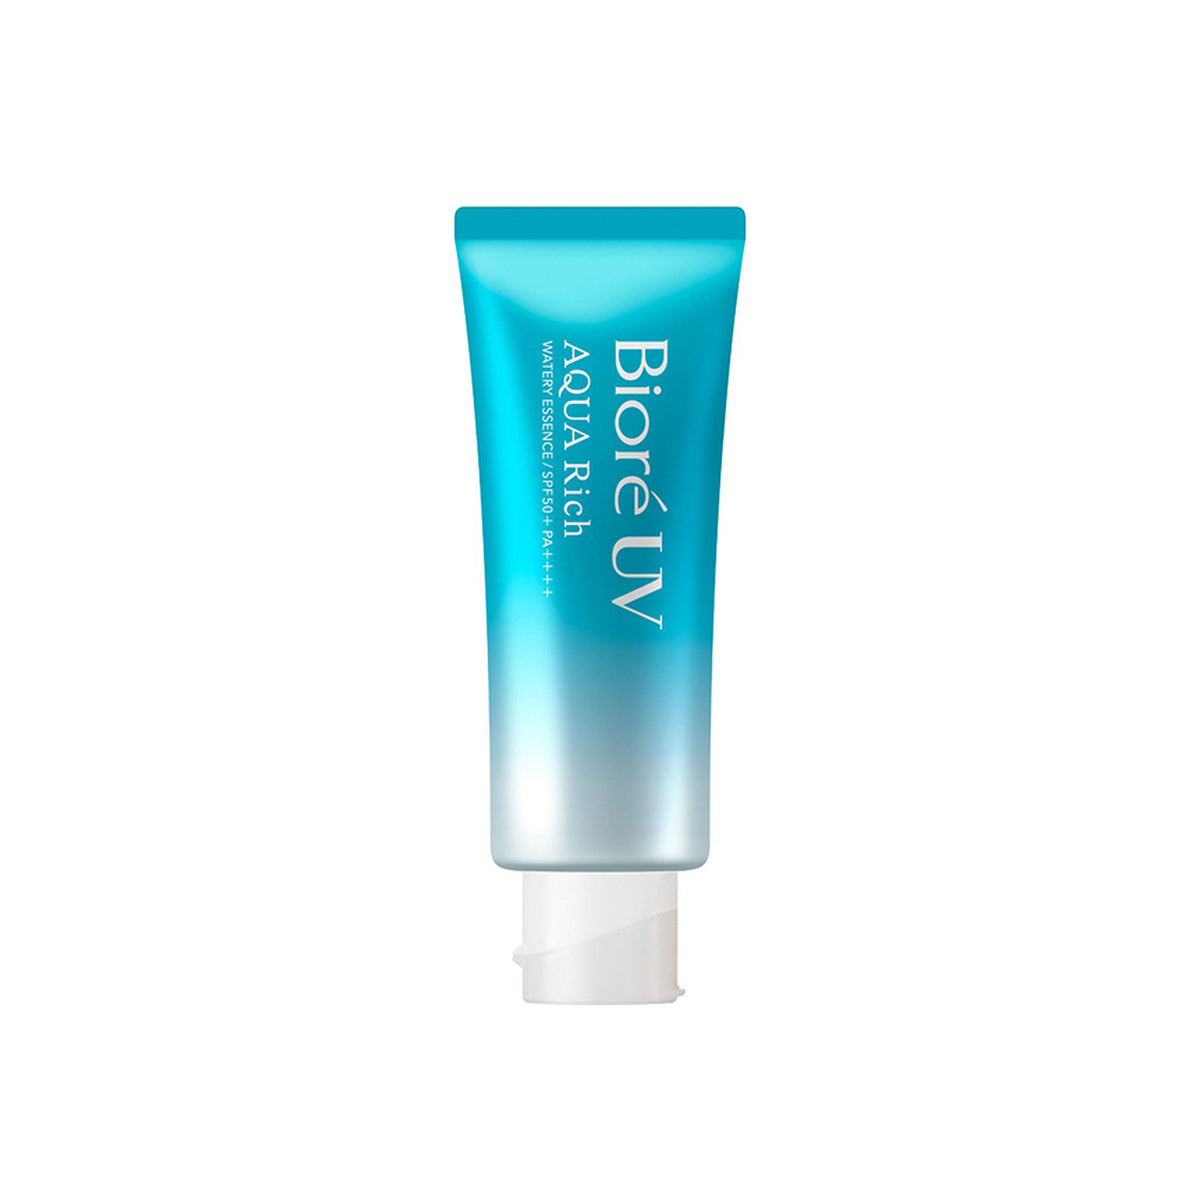 Biore UV Aqua Rich Watery Essence Sunscreen 105g